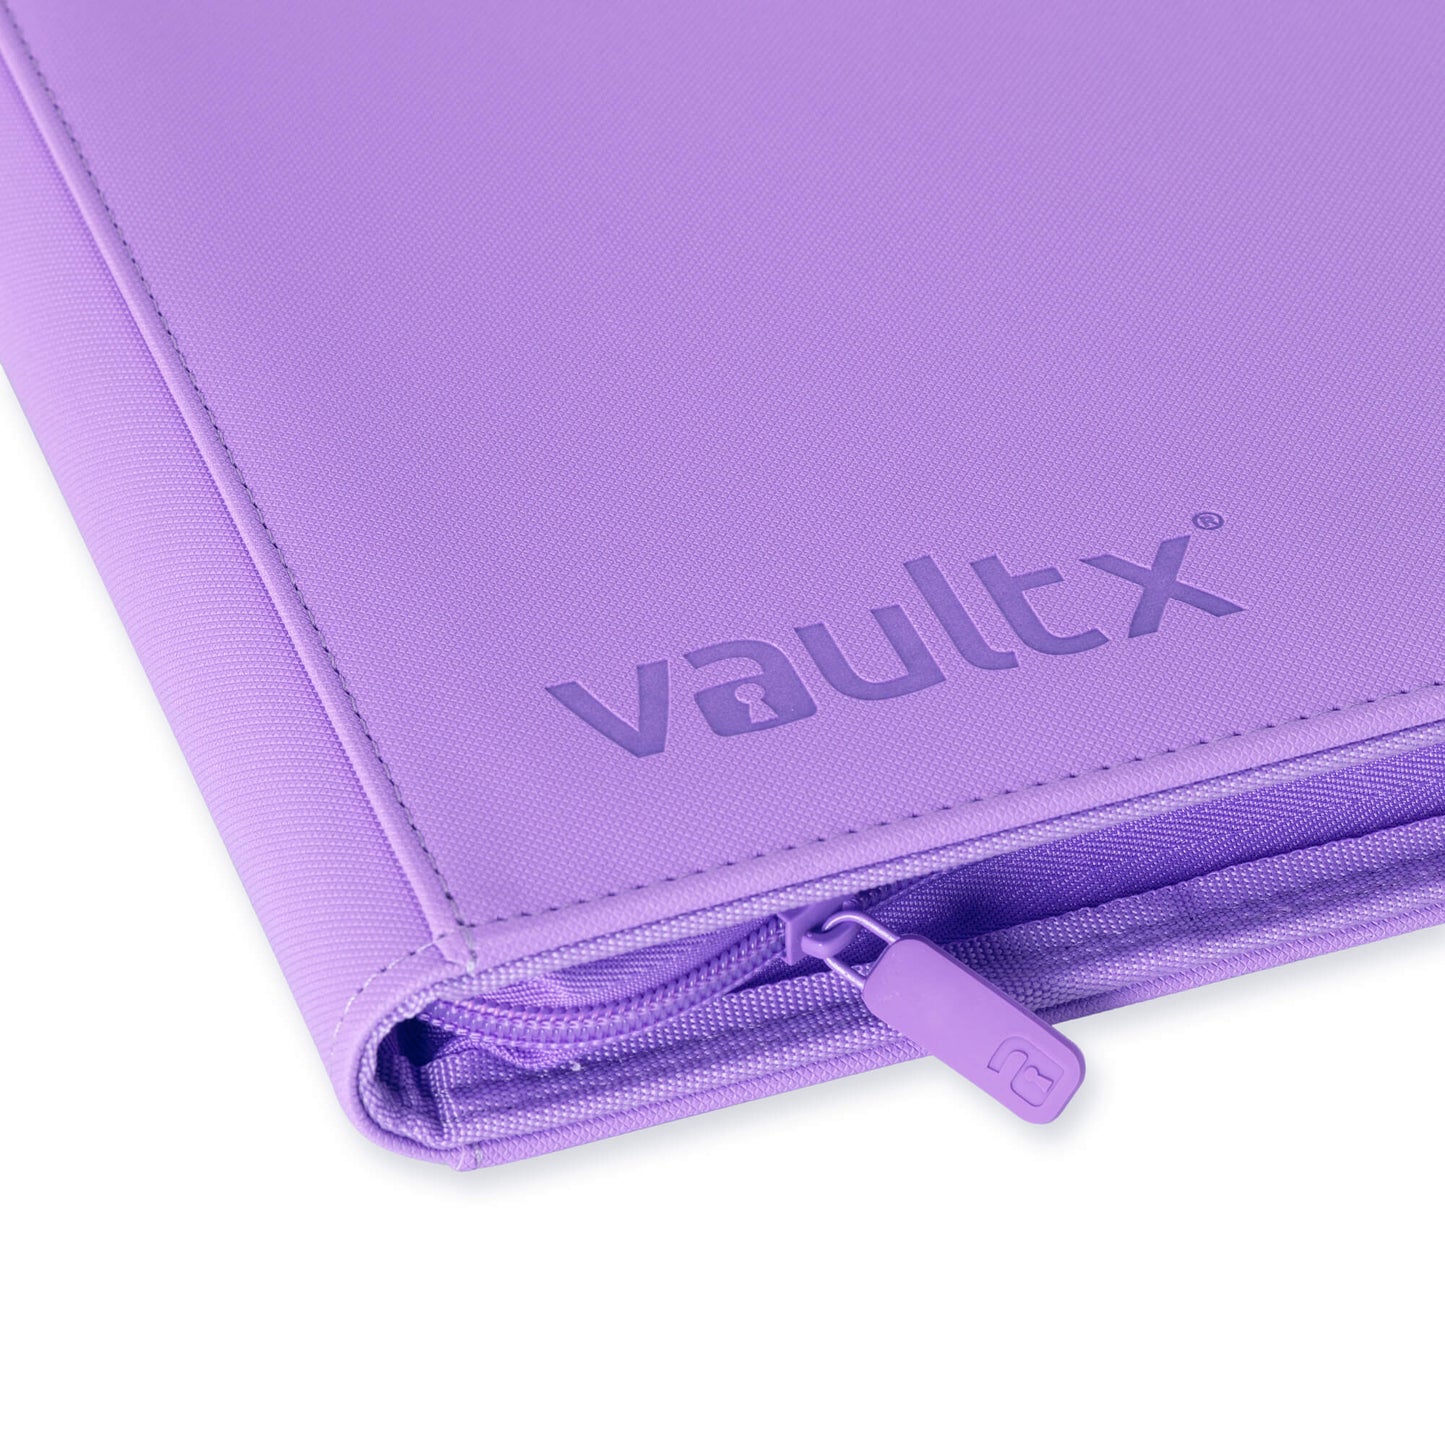 Vault X – tagged 9-Pocket – Card Catcher Shop